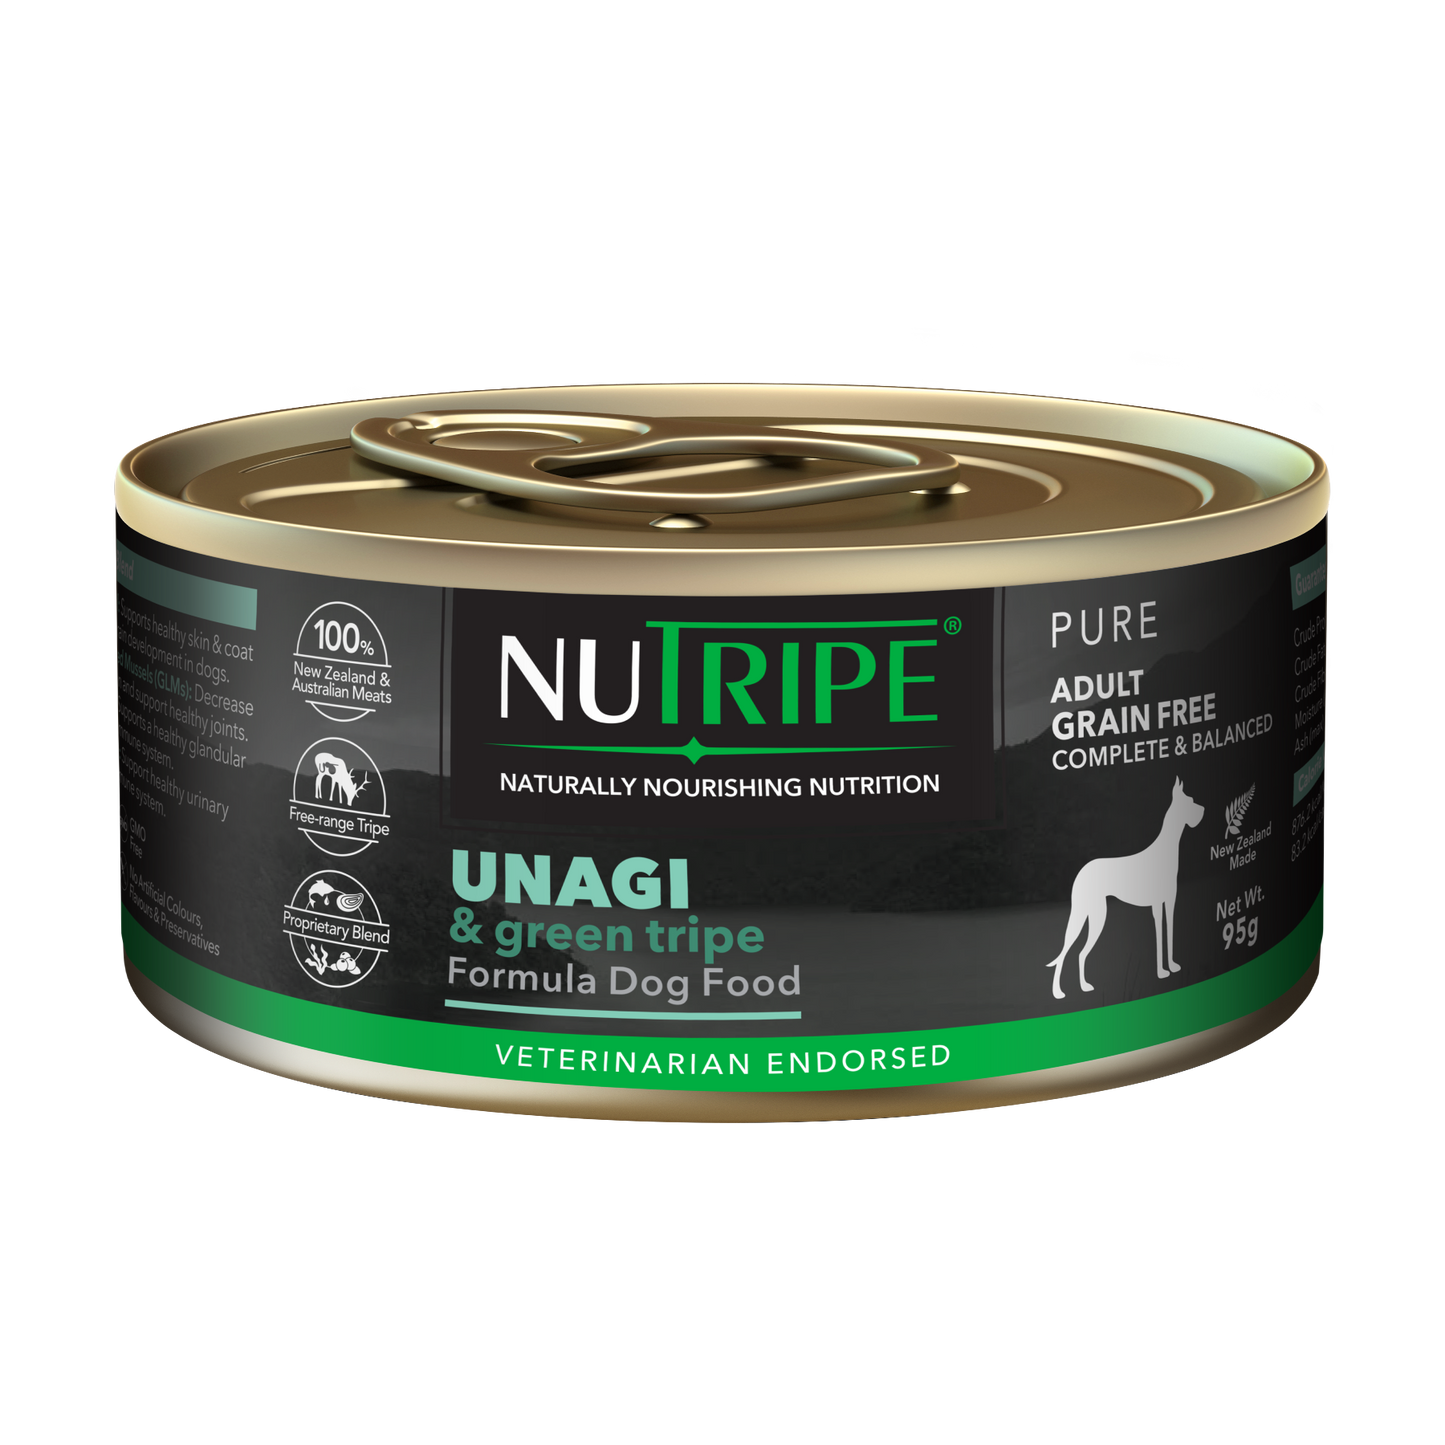 Nutripe Pure Unagi & Green Tripe Adult Dog Canned Food 95g & 390g